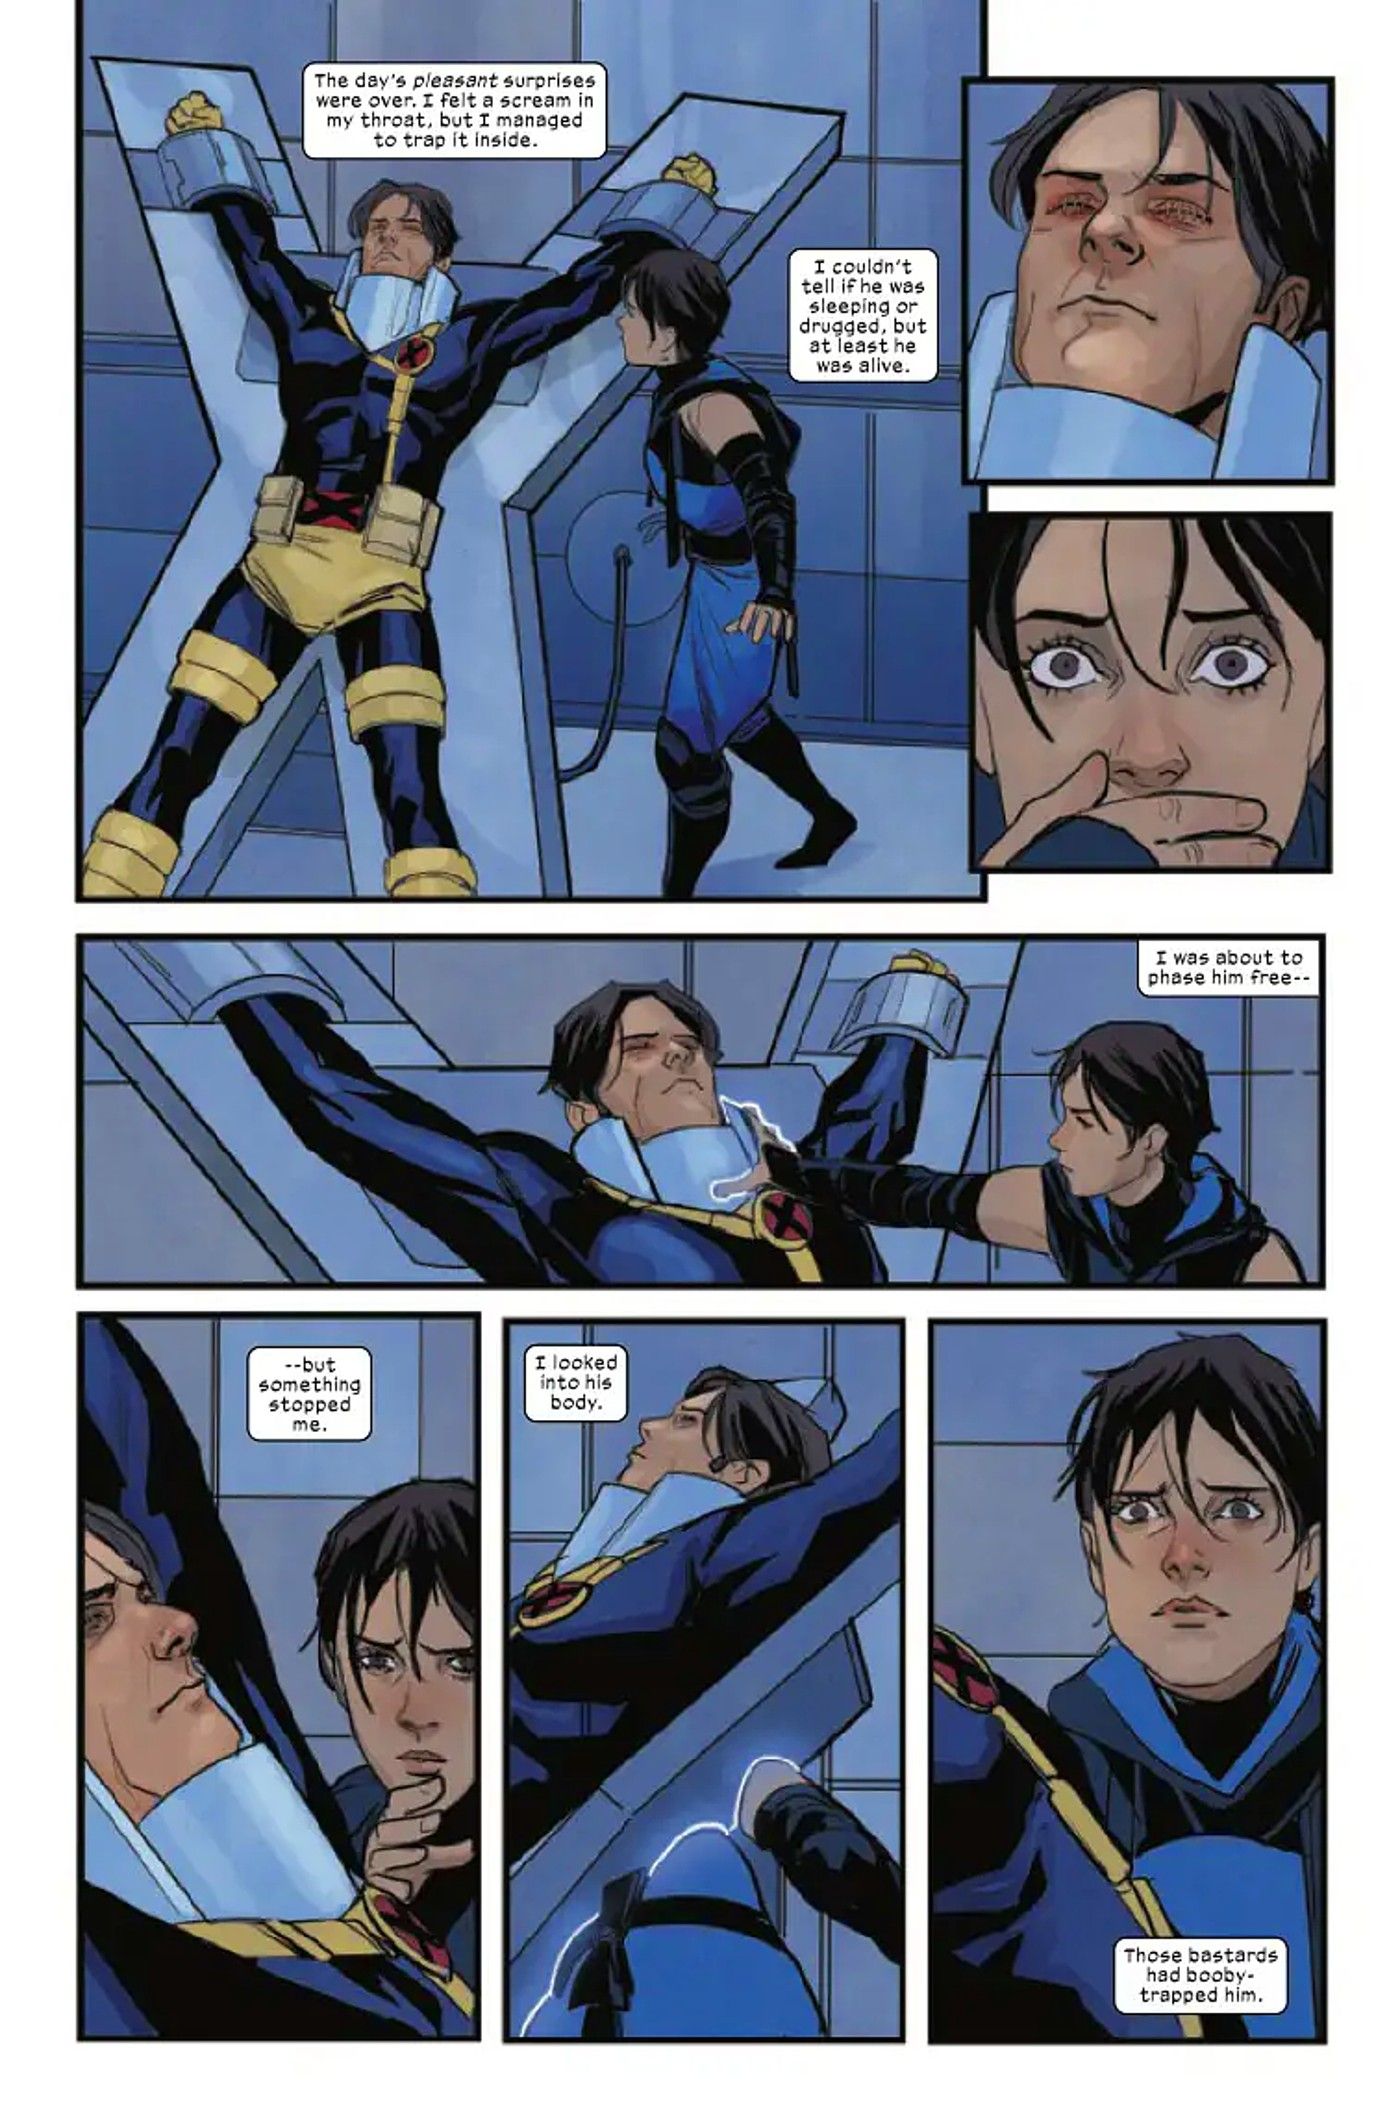 X-men 27 preview page 3